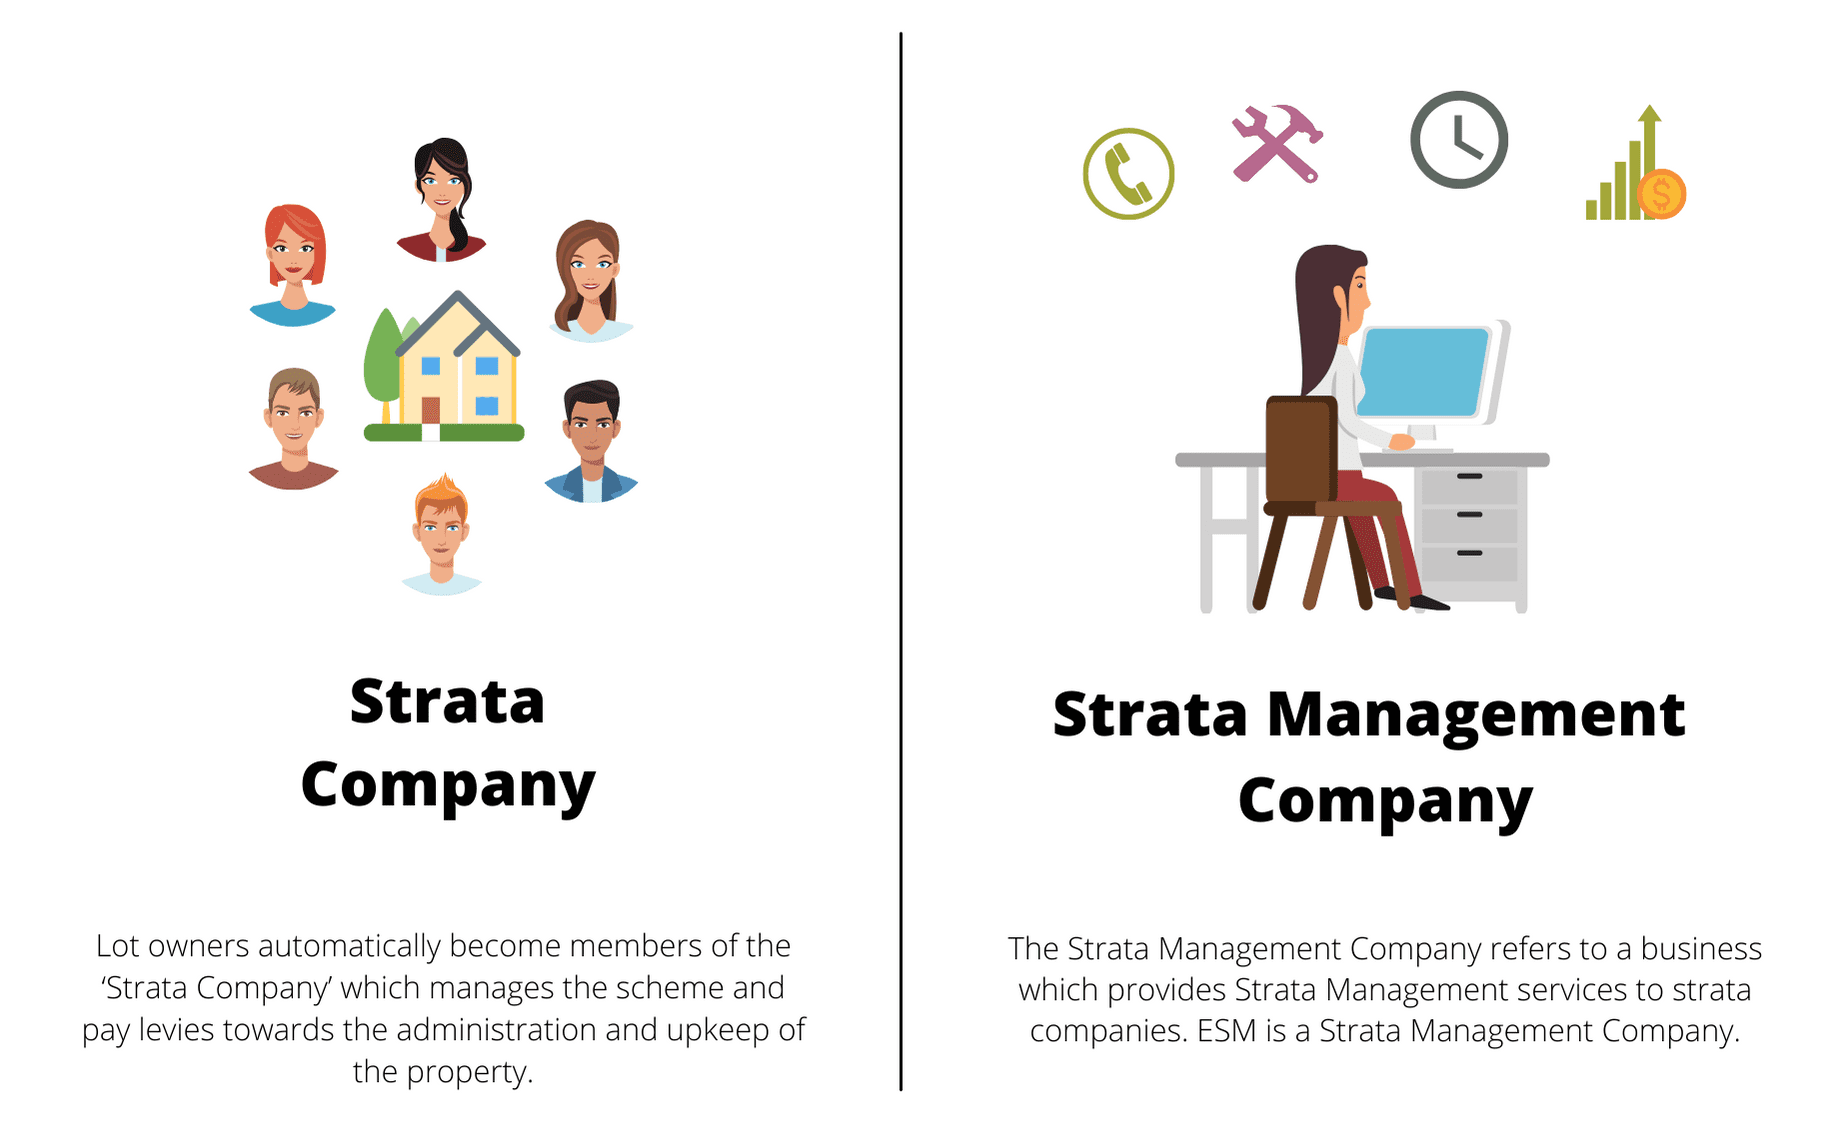 Strata Management Company